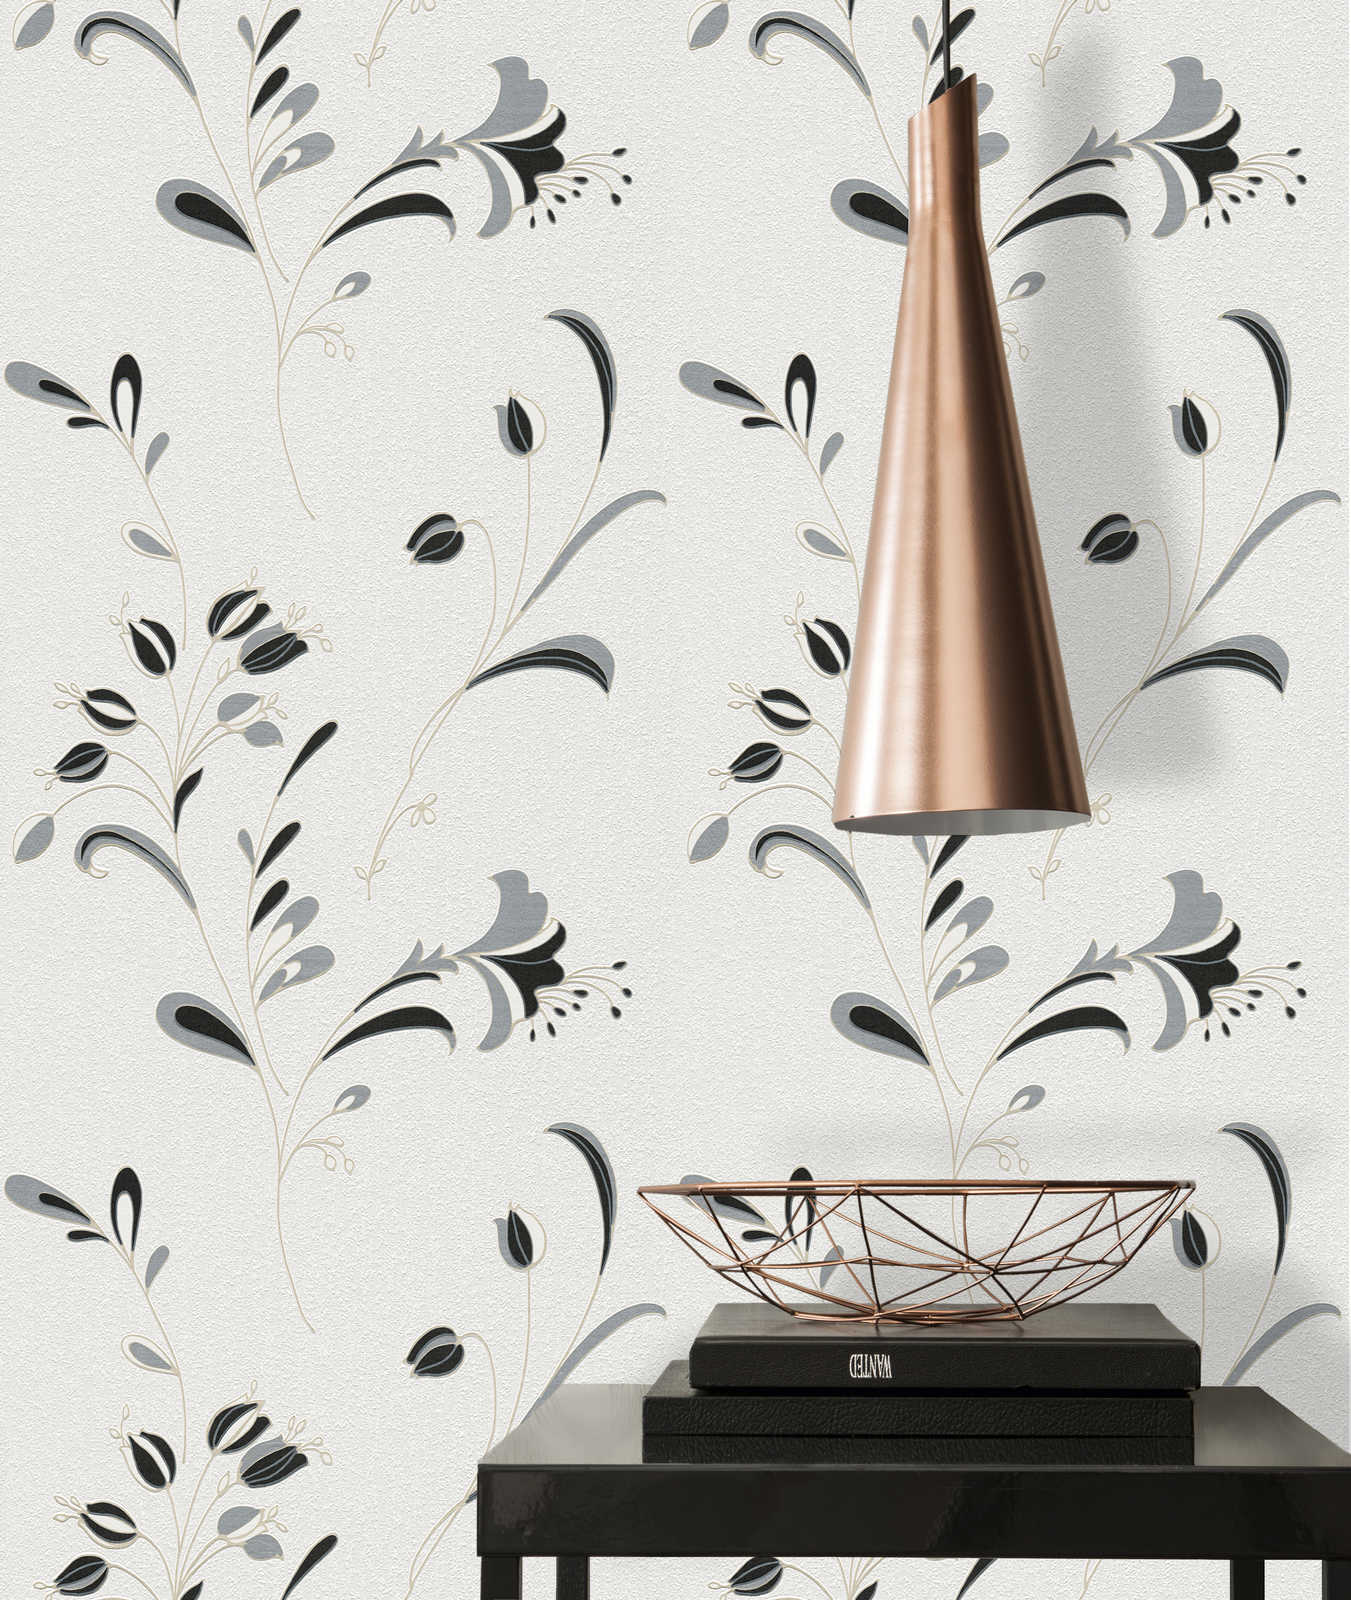             Wallpaper floral motif, silver accents & texture pattern - black, white, silver
        